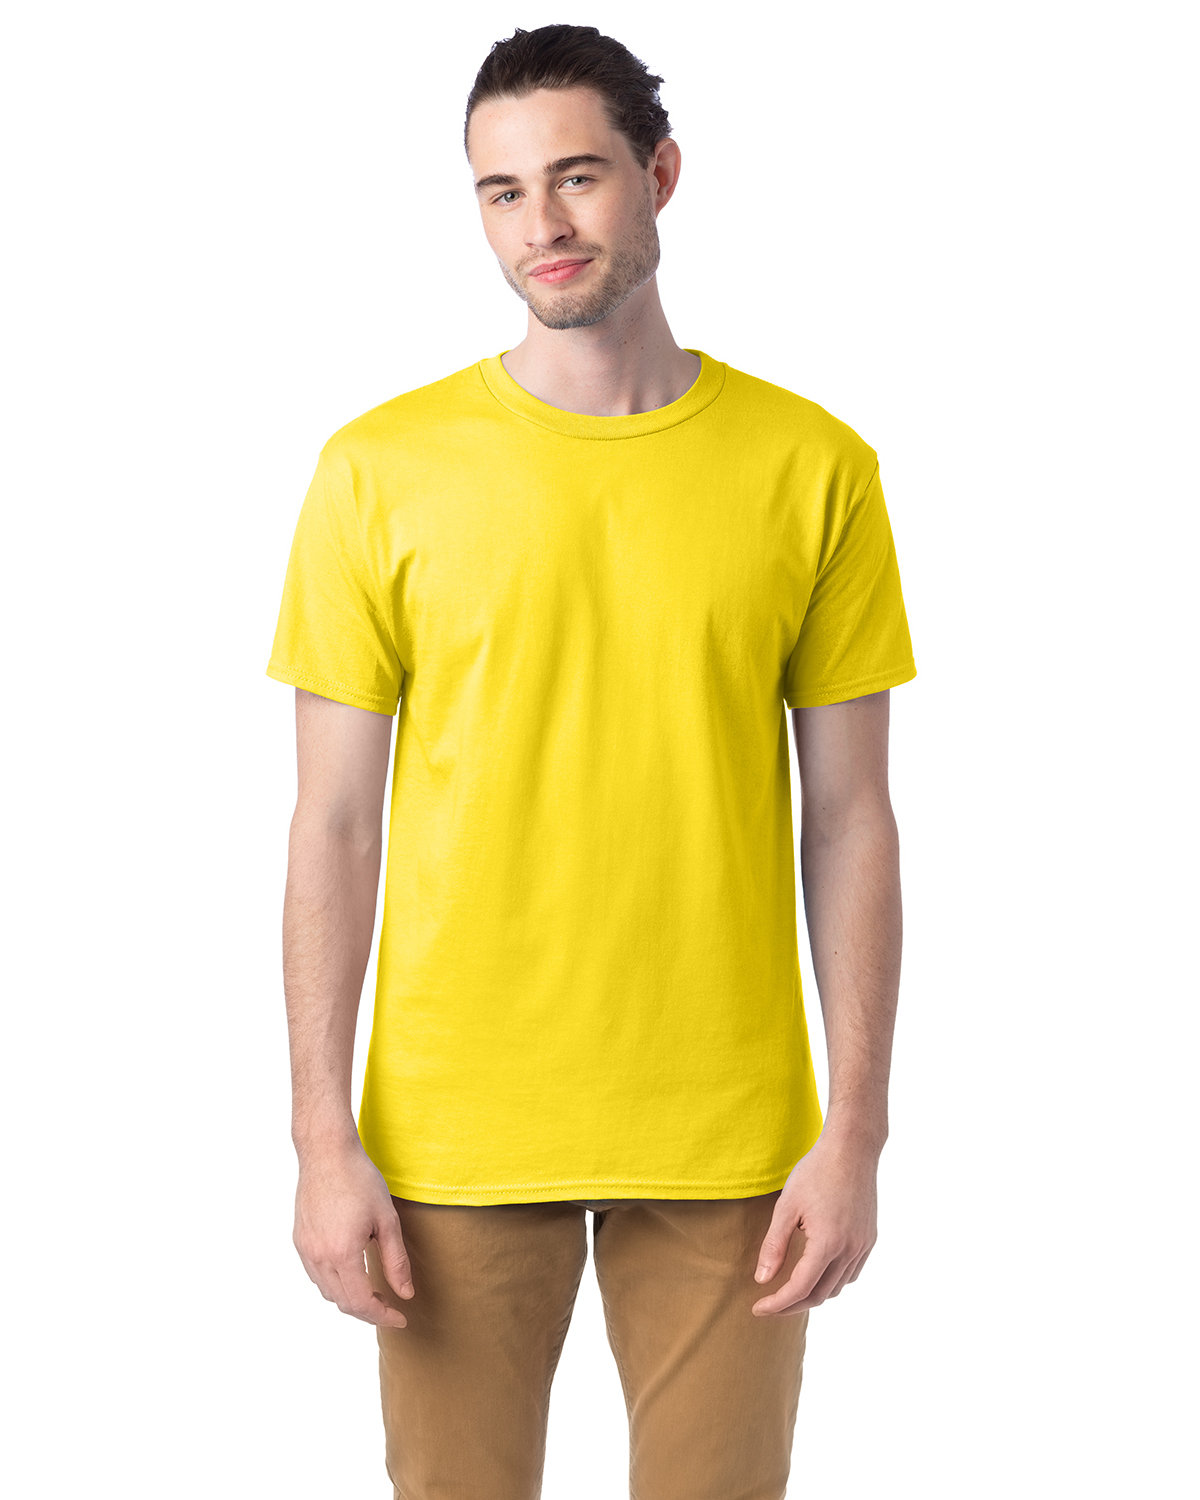 Hanes Unisex 5.2 oz., Comfortsoft® Cotton T-Shirt ATHLETIC YELLOW 